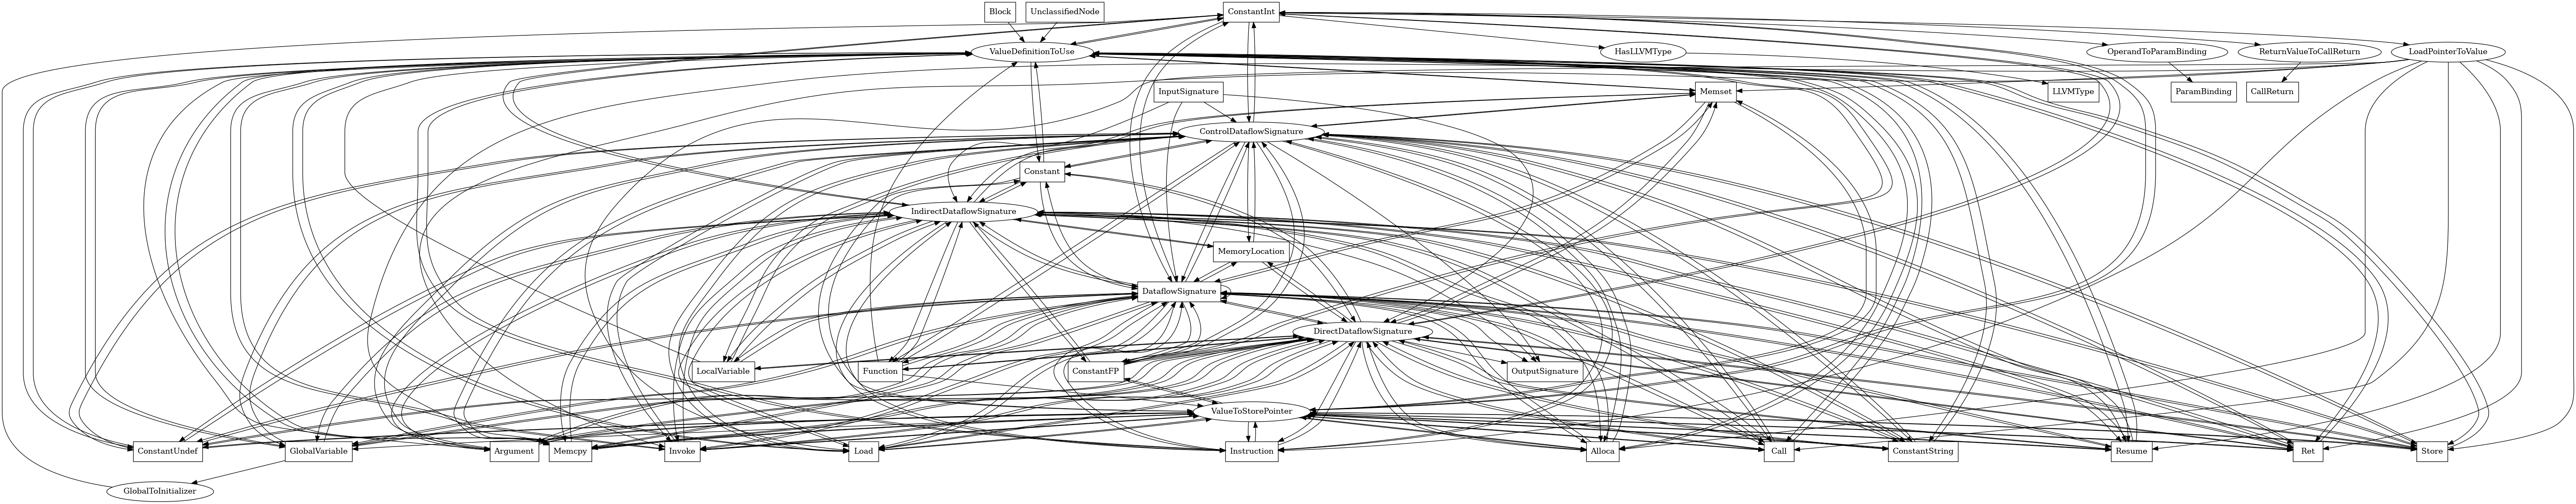 Entity-relationship diagram for ConstantInt nodes